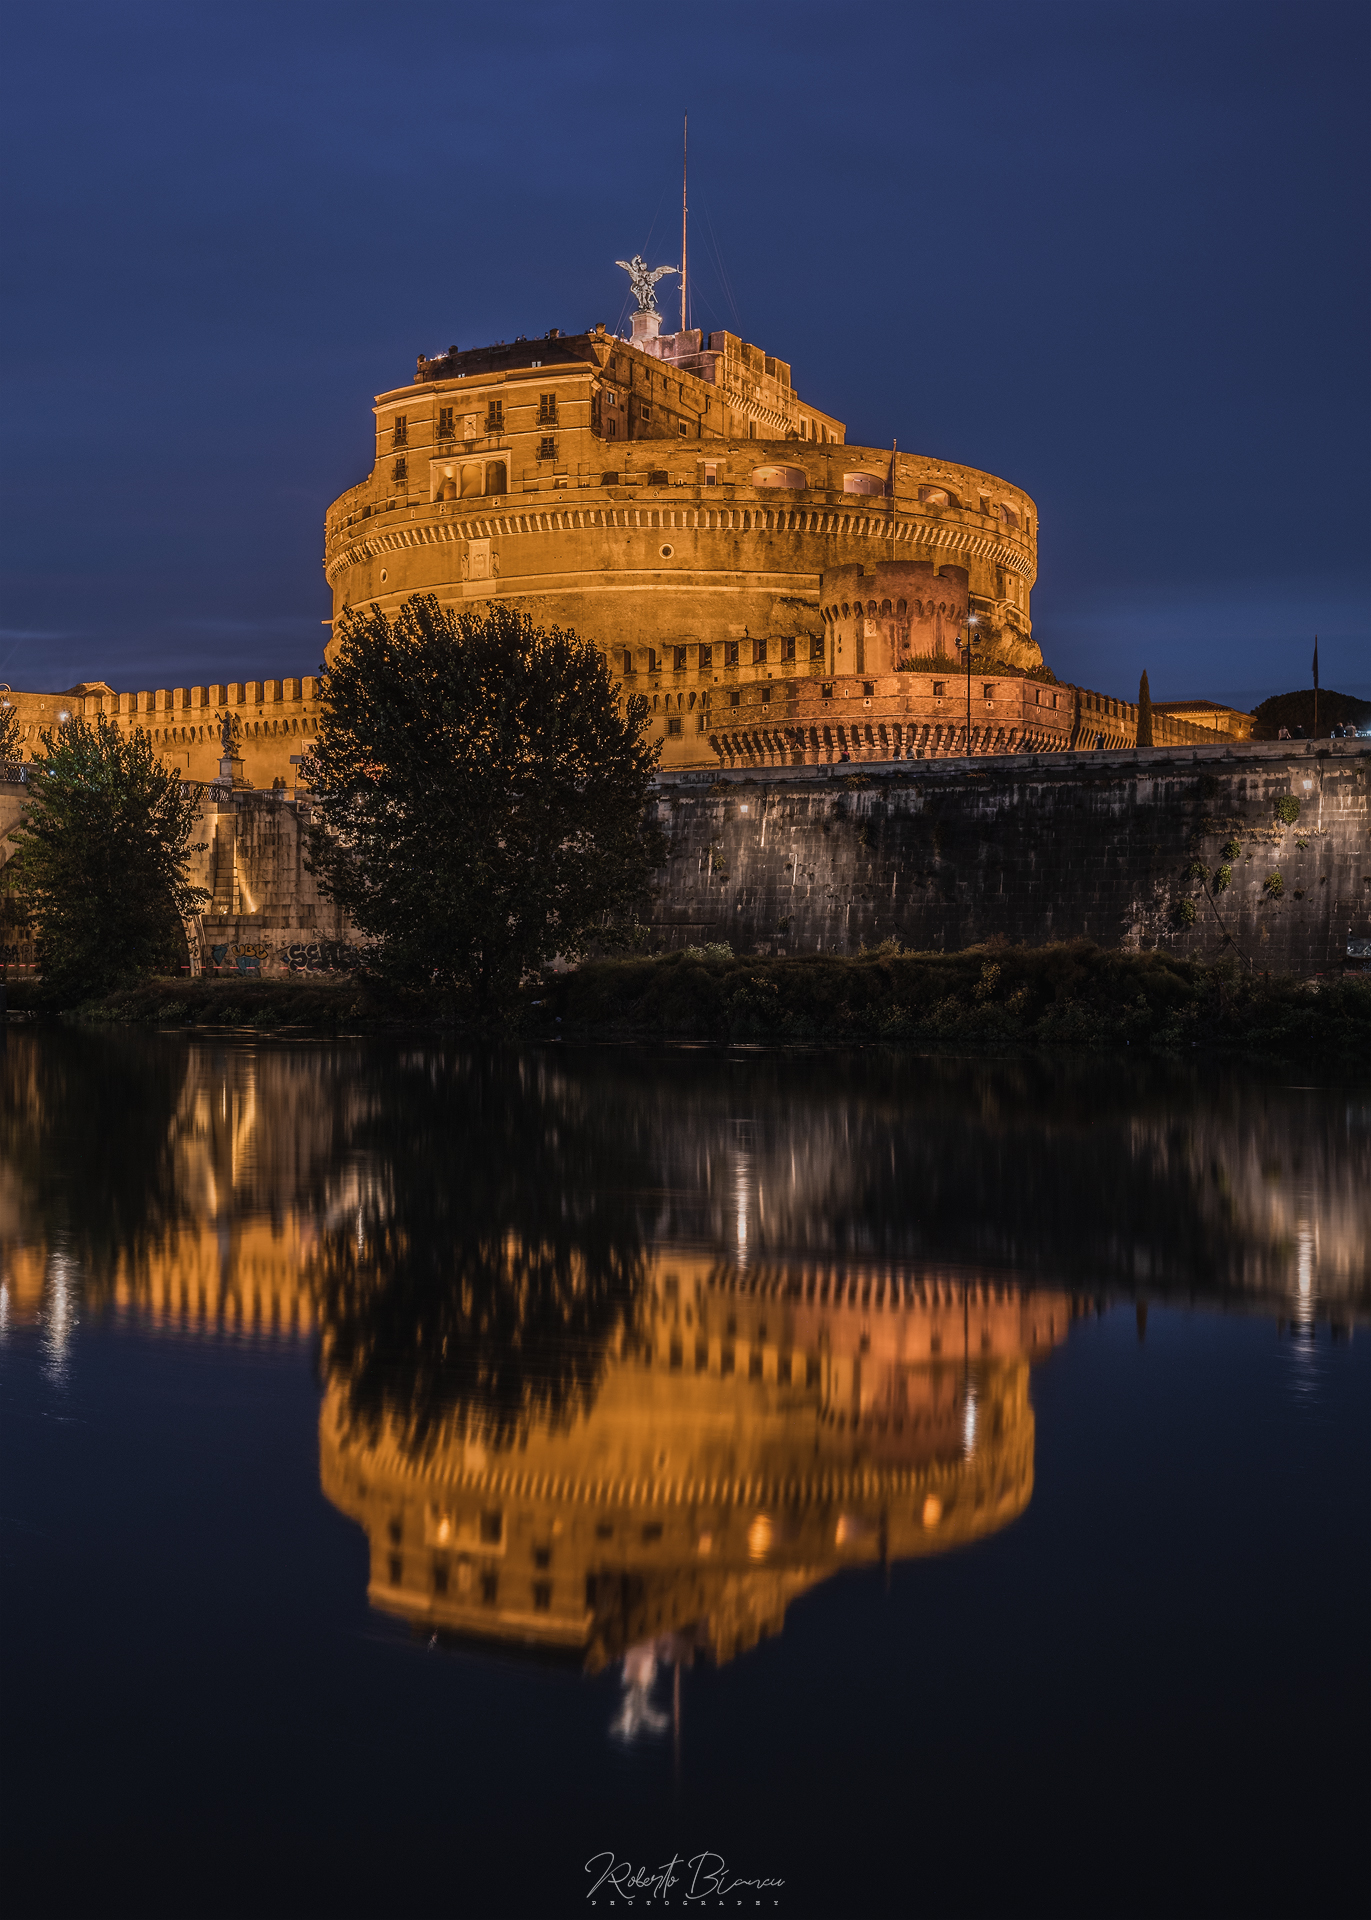 Mirroring Castel S. Angelo...